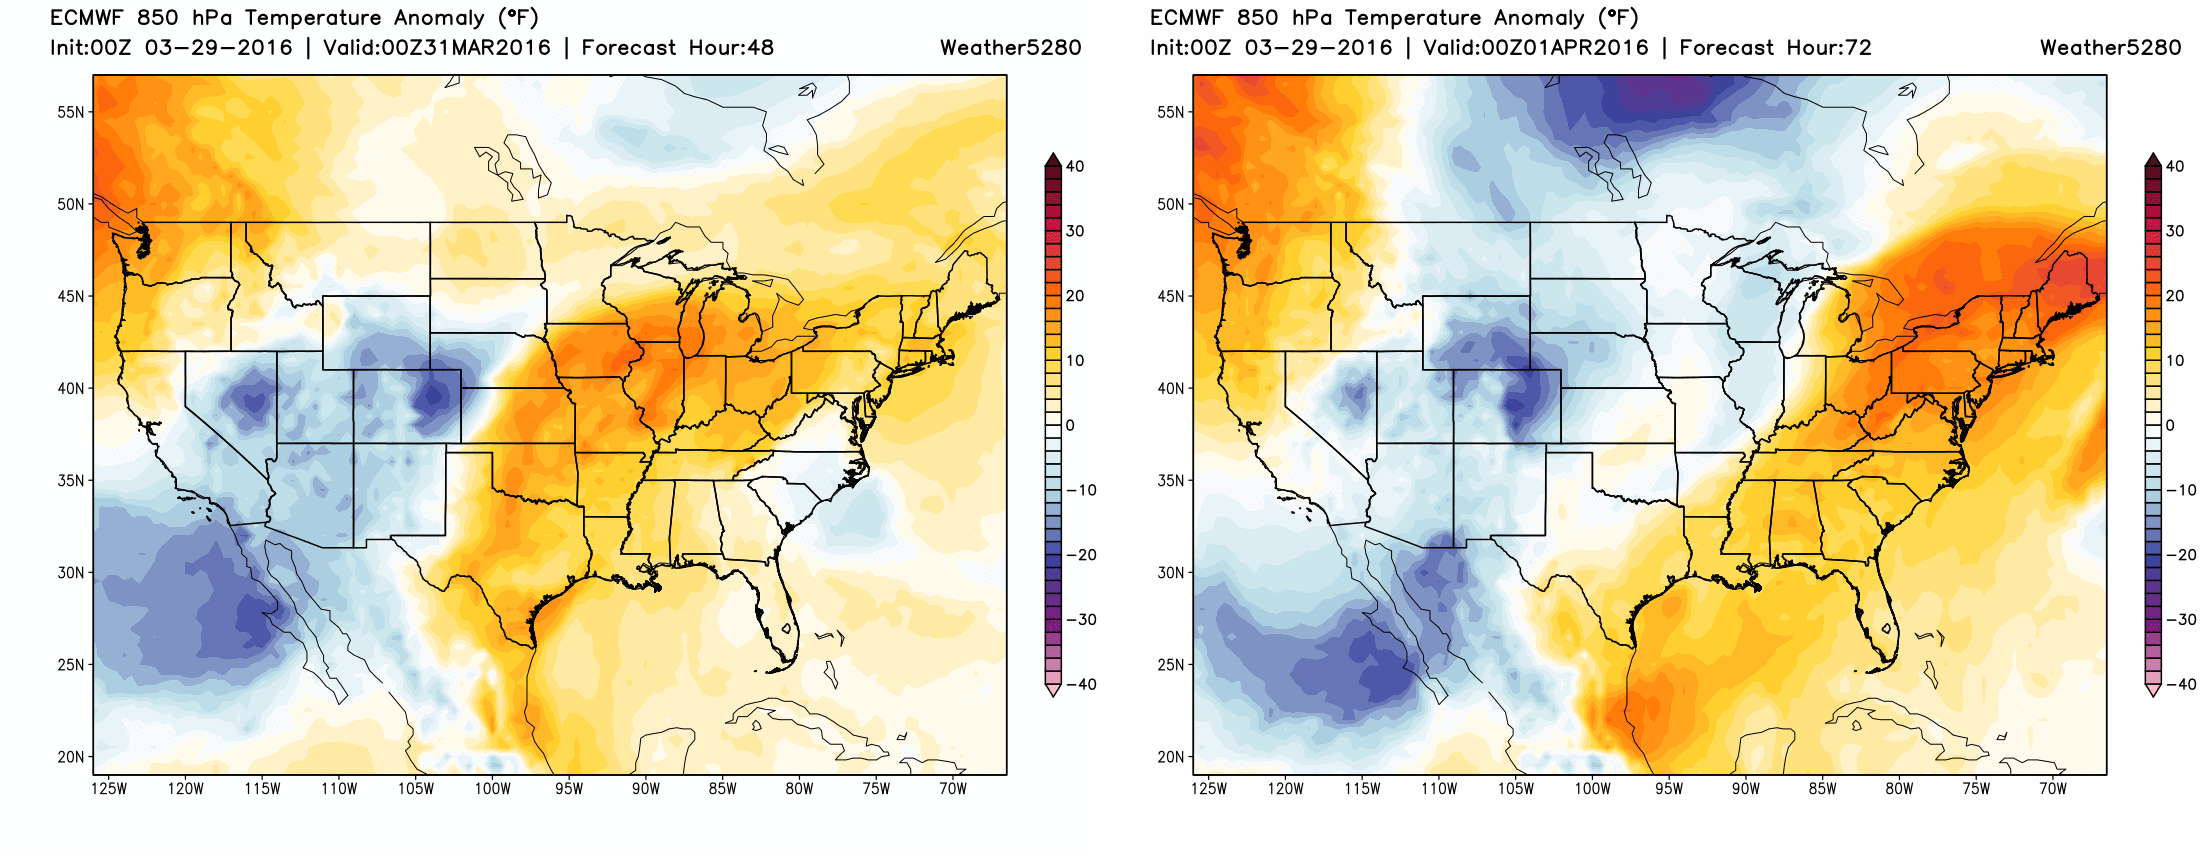 ECMWF 850 temperature anomalies | Weather5280 Models